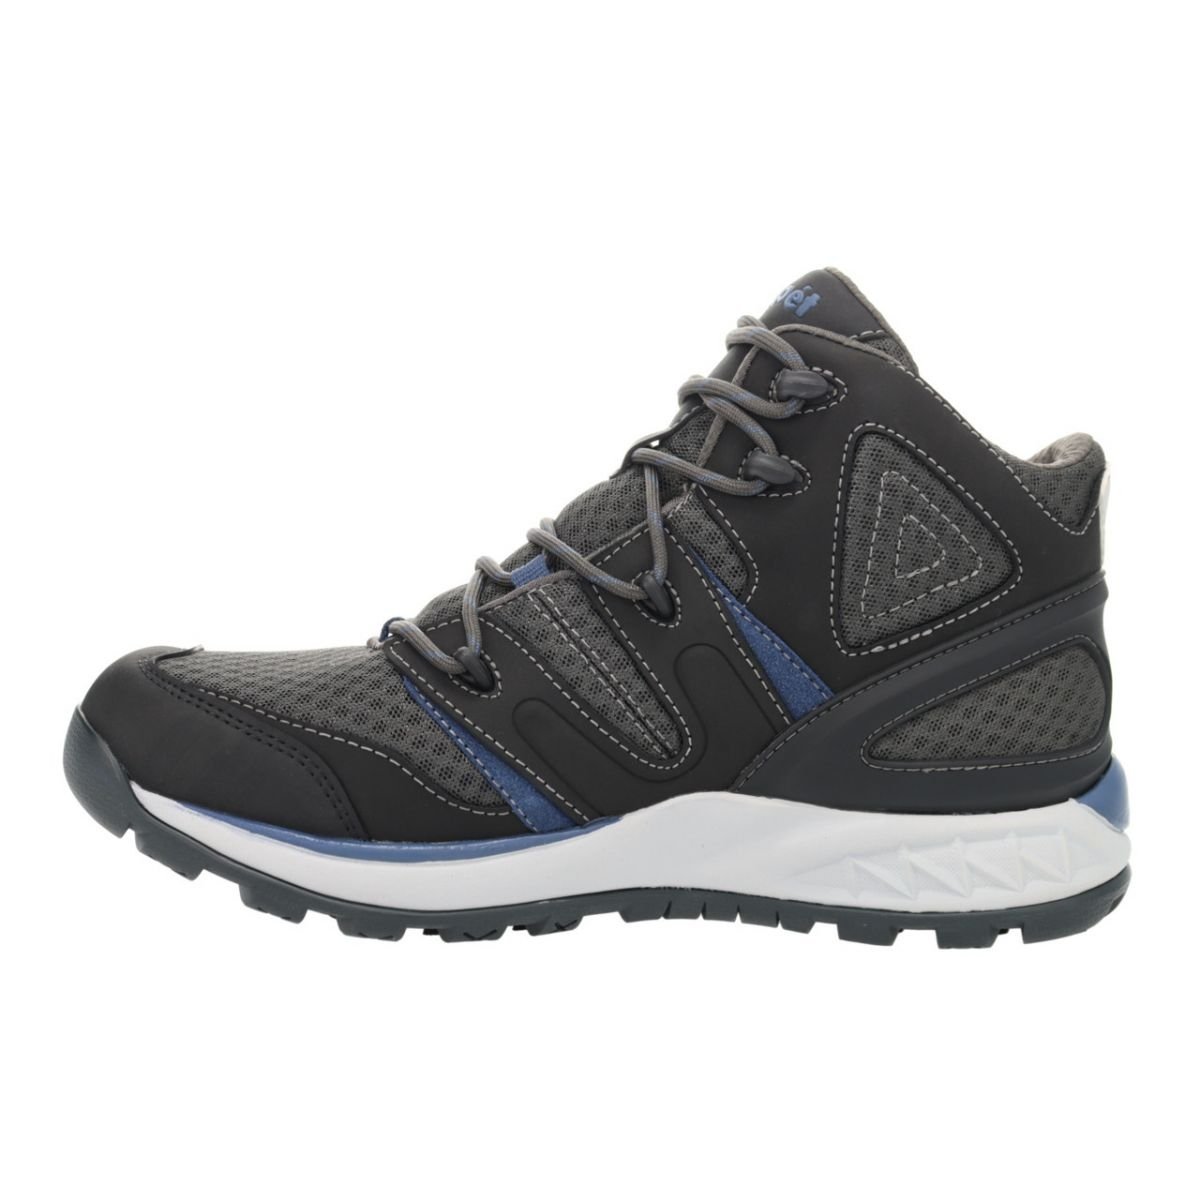 Propet Men's Veymont Waterproof Hiking Boot Grey/Blue - MOA022SGRB GREY/BLUE - GREY/BLUE, 10.5 X-Wide